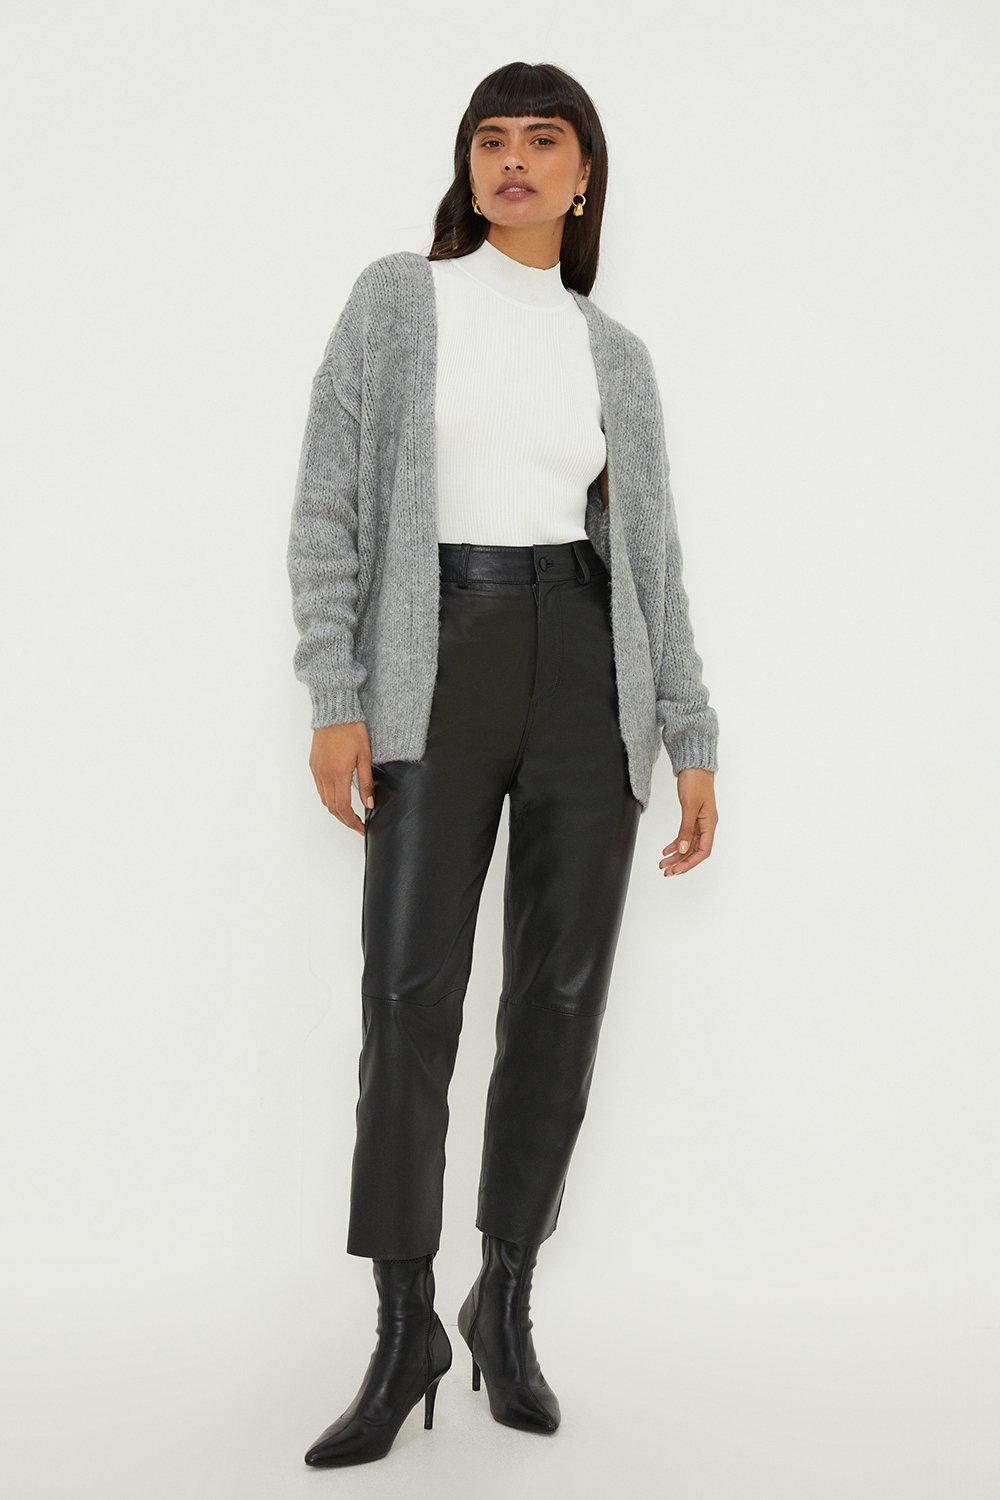 Women’s Chunky Knit Oversized Batwing Cardigan - grey - M/L